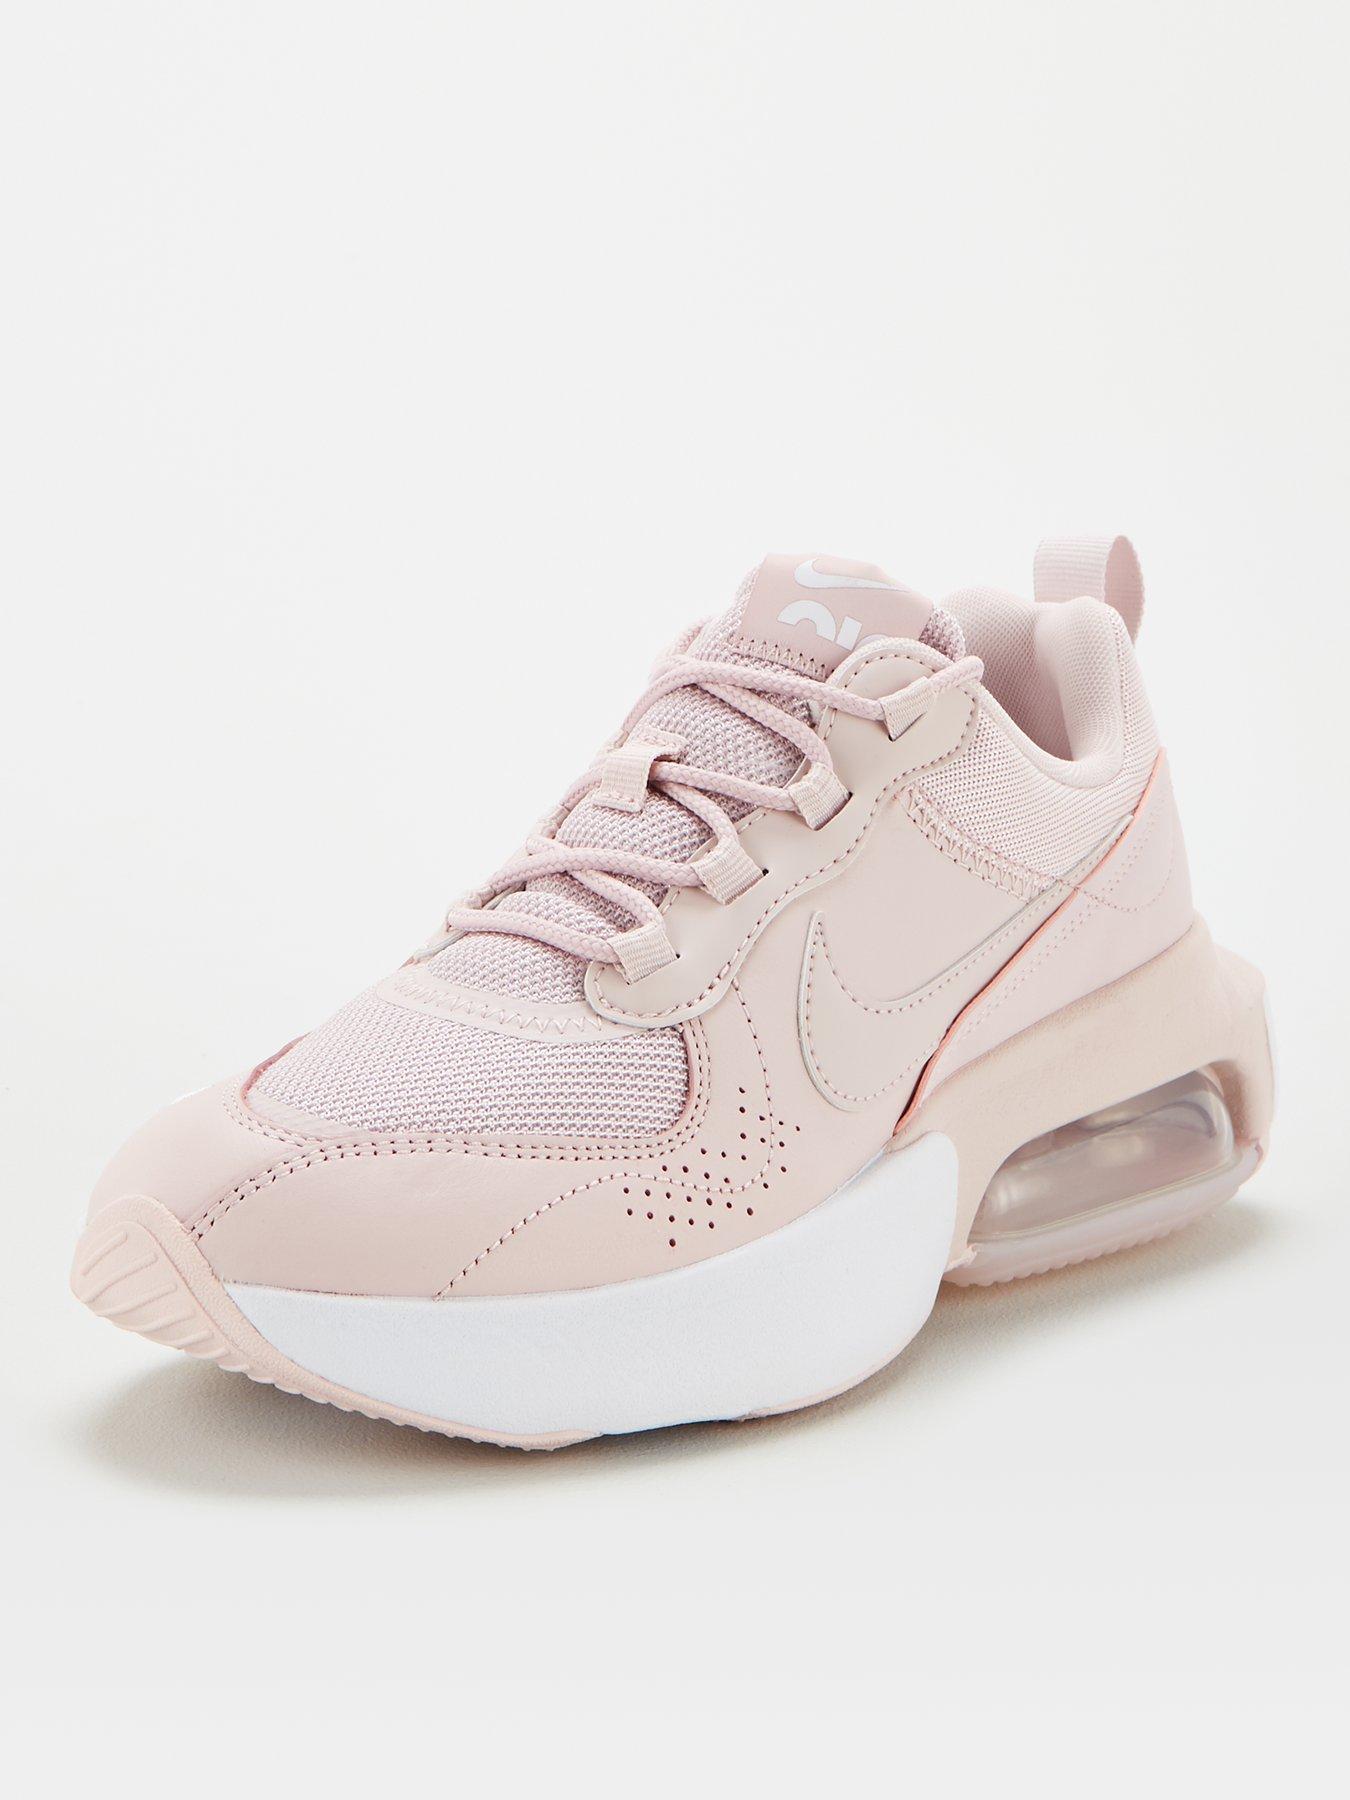 Nike Air Max Verona - Pink/White | very 